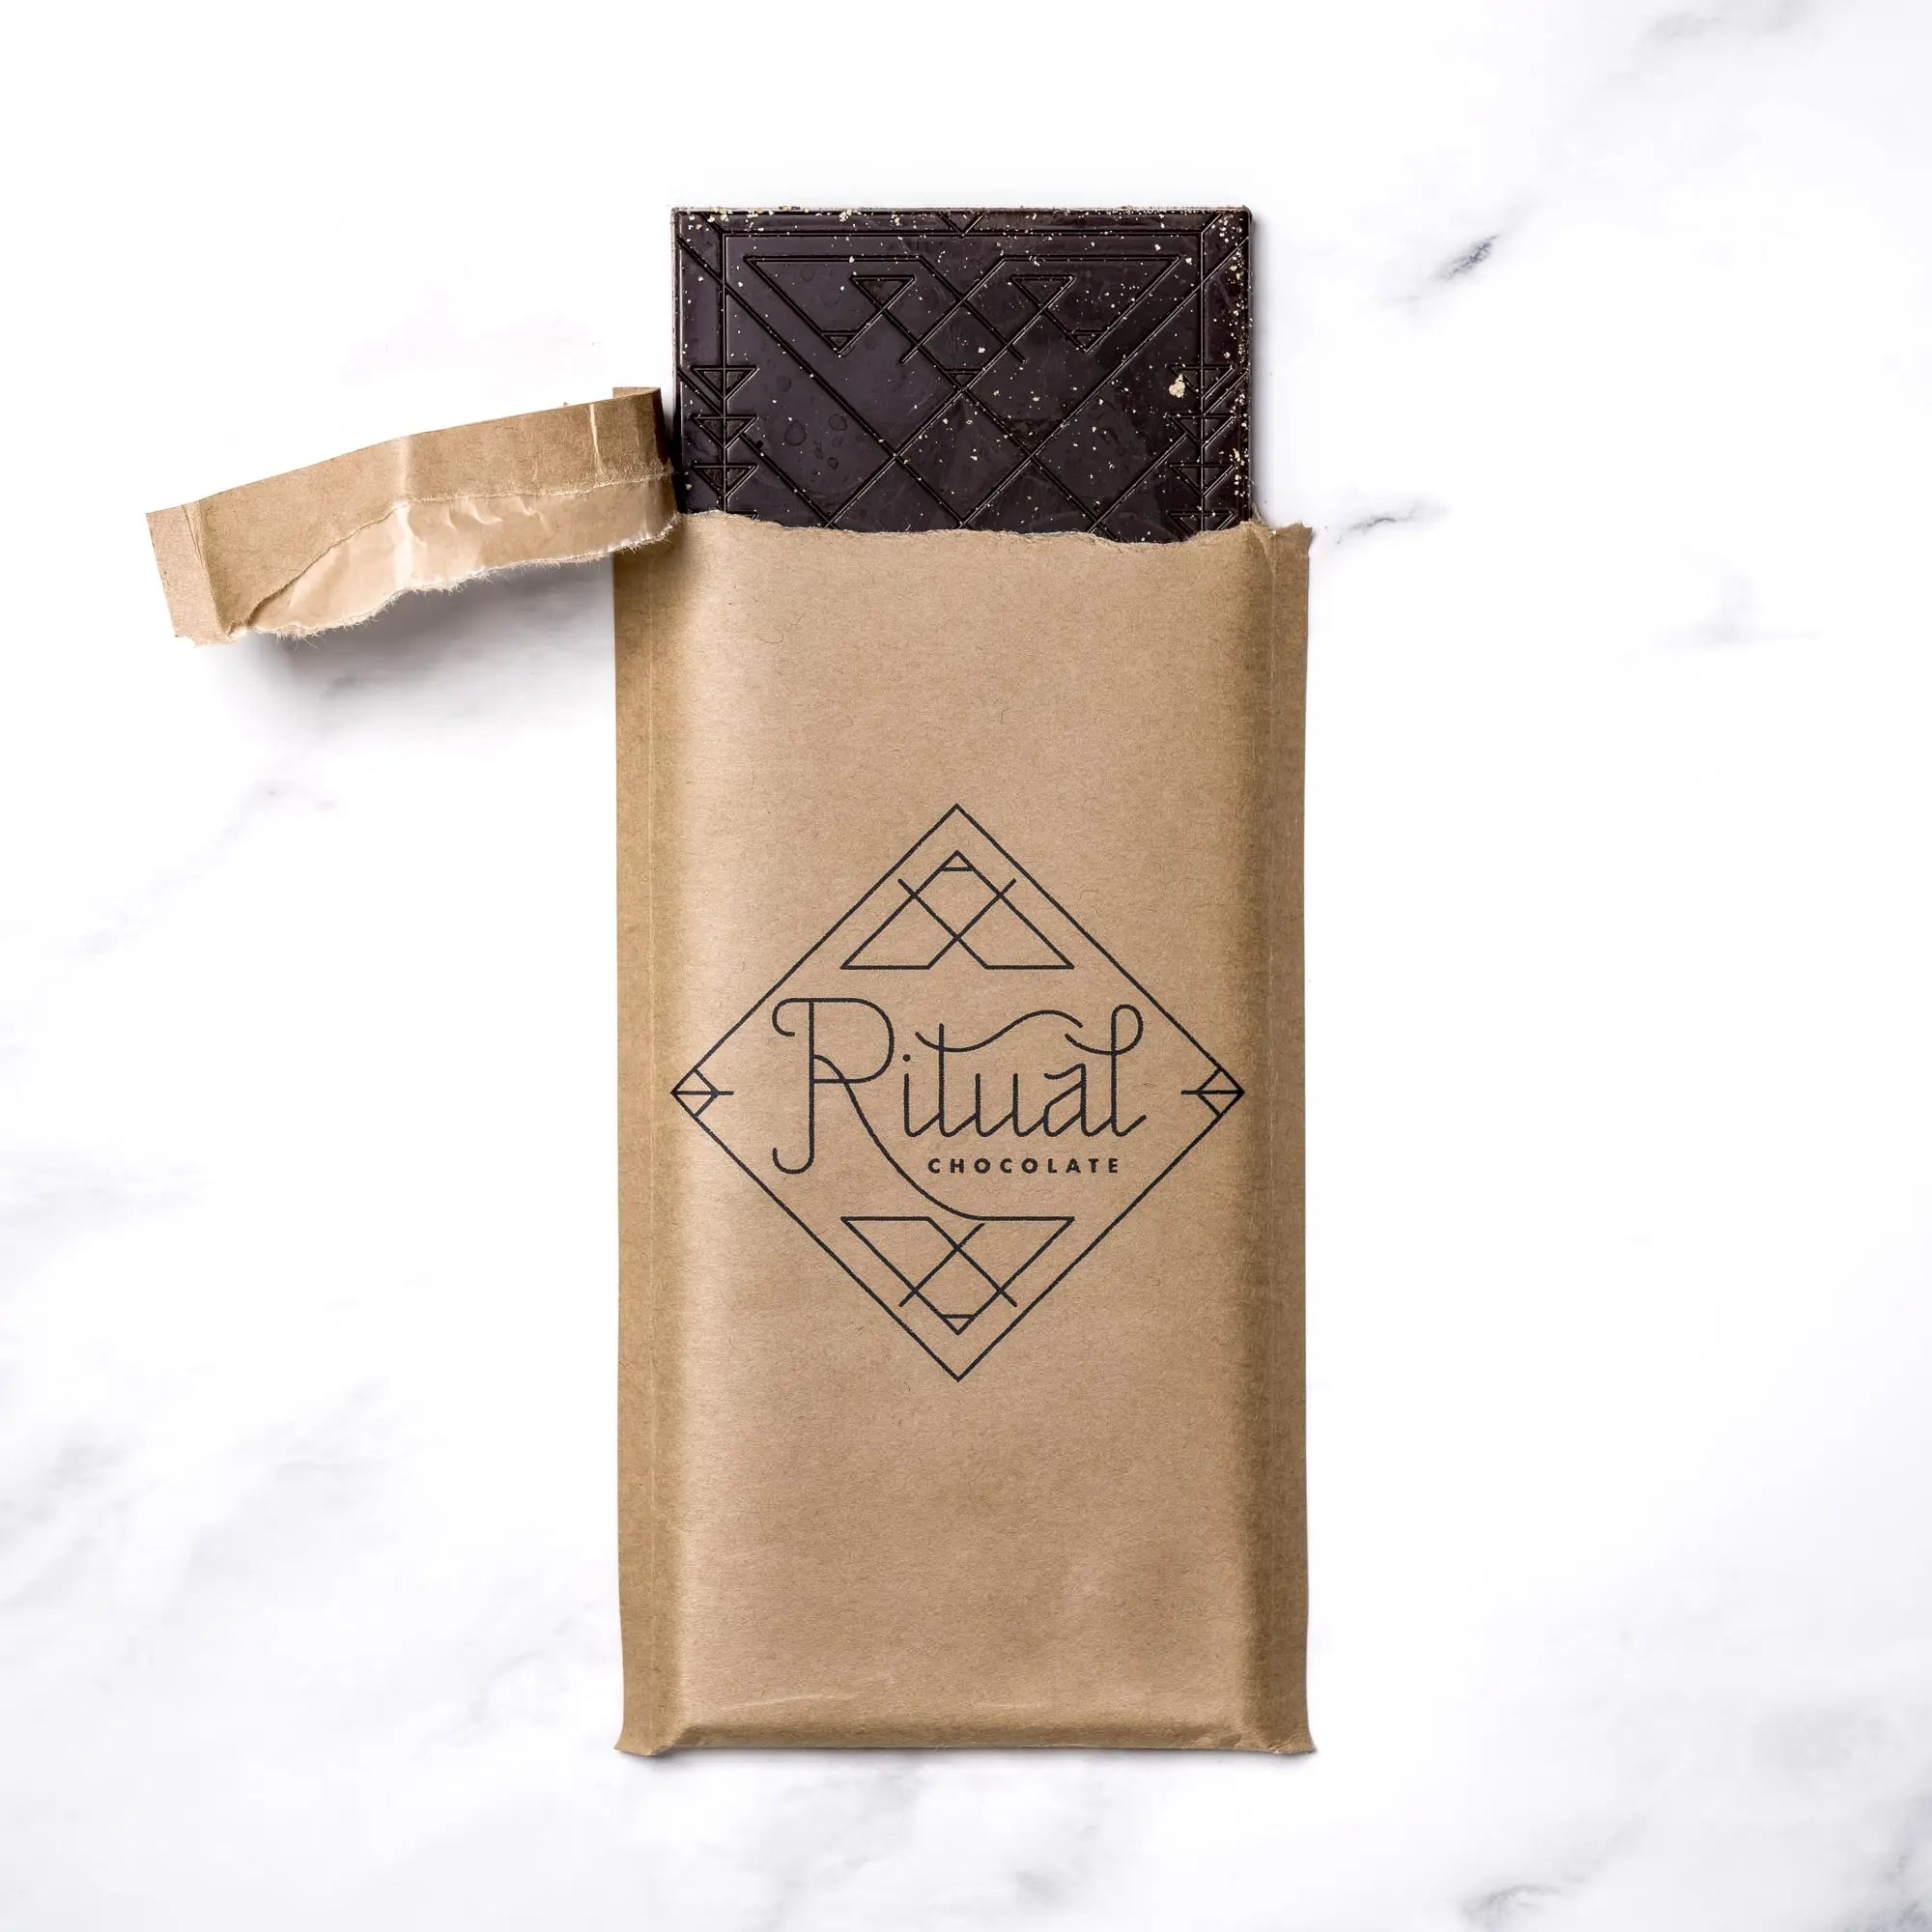 S'mores Bar 70% Chocolate by Ritual Chocolates. Graham Cracker and Caramelized Sugar Dark Chocolate Bar. Organic Chocolate.